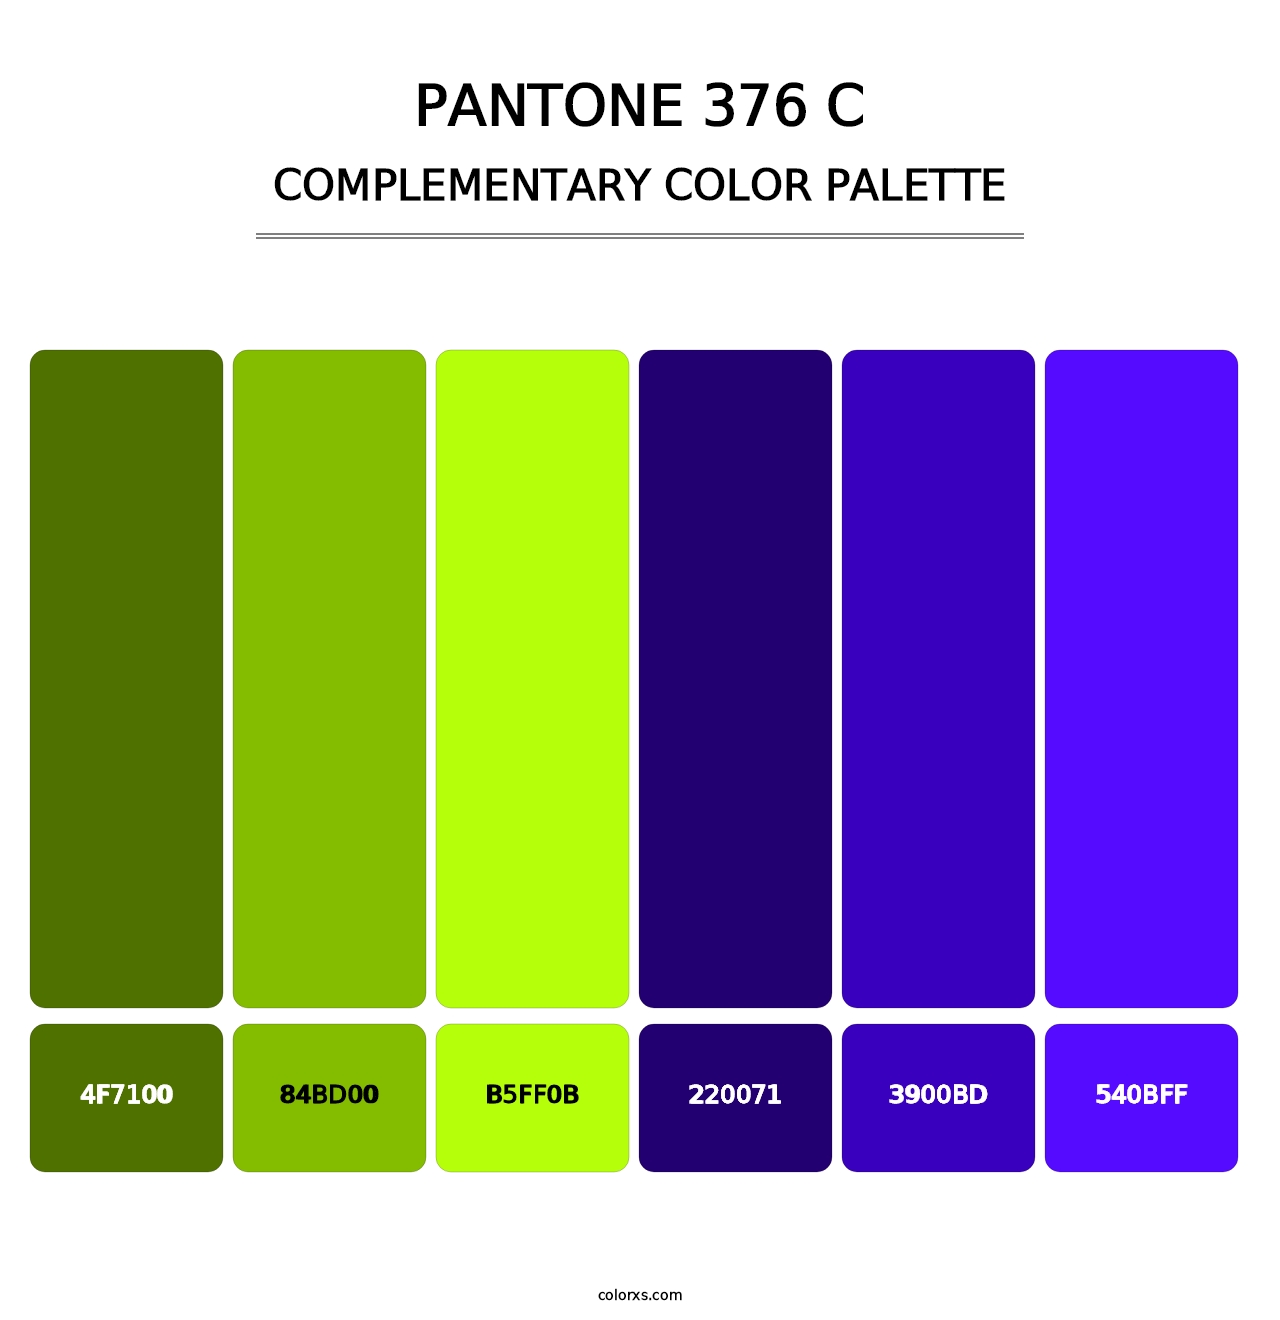 PANTONE 376 C - Complementary Color Palette